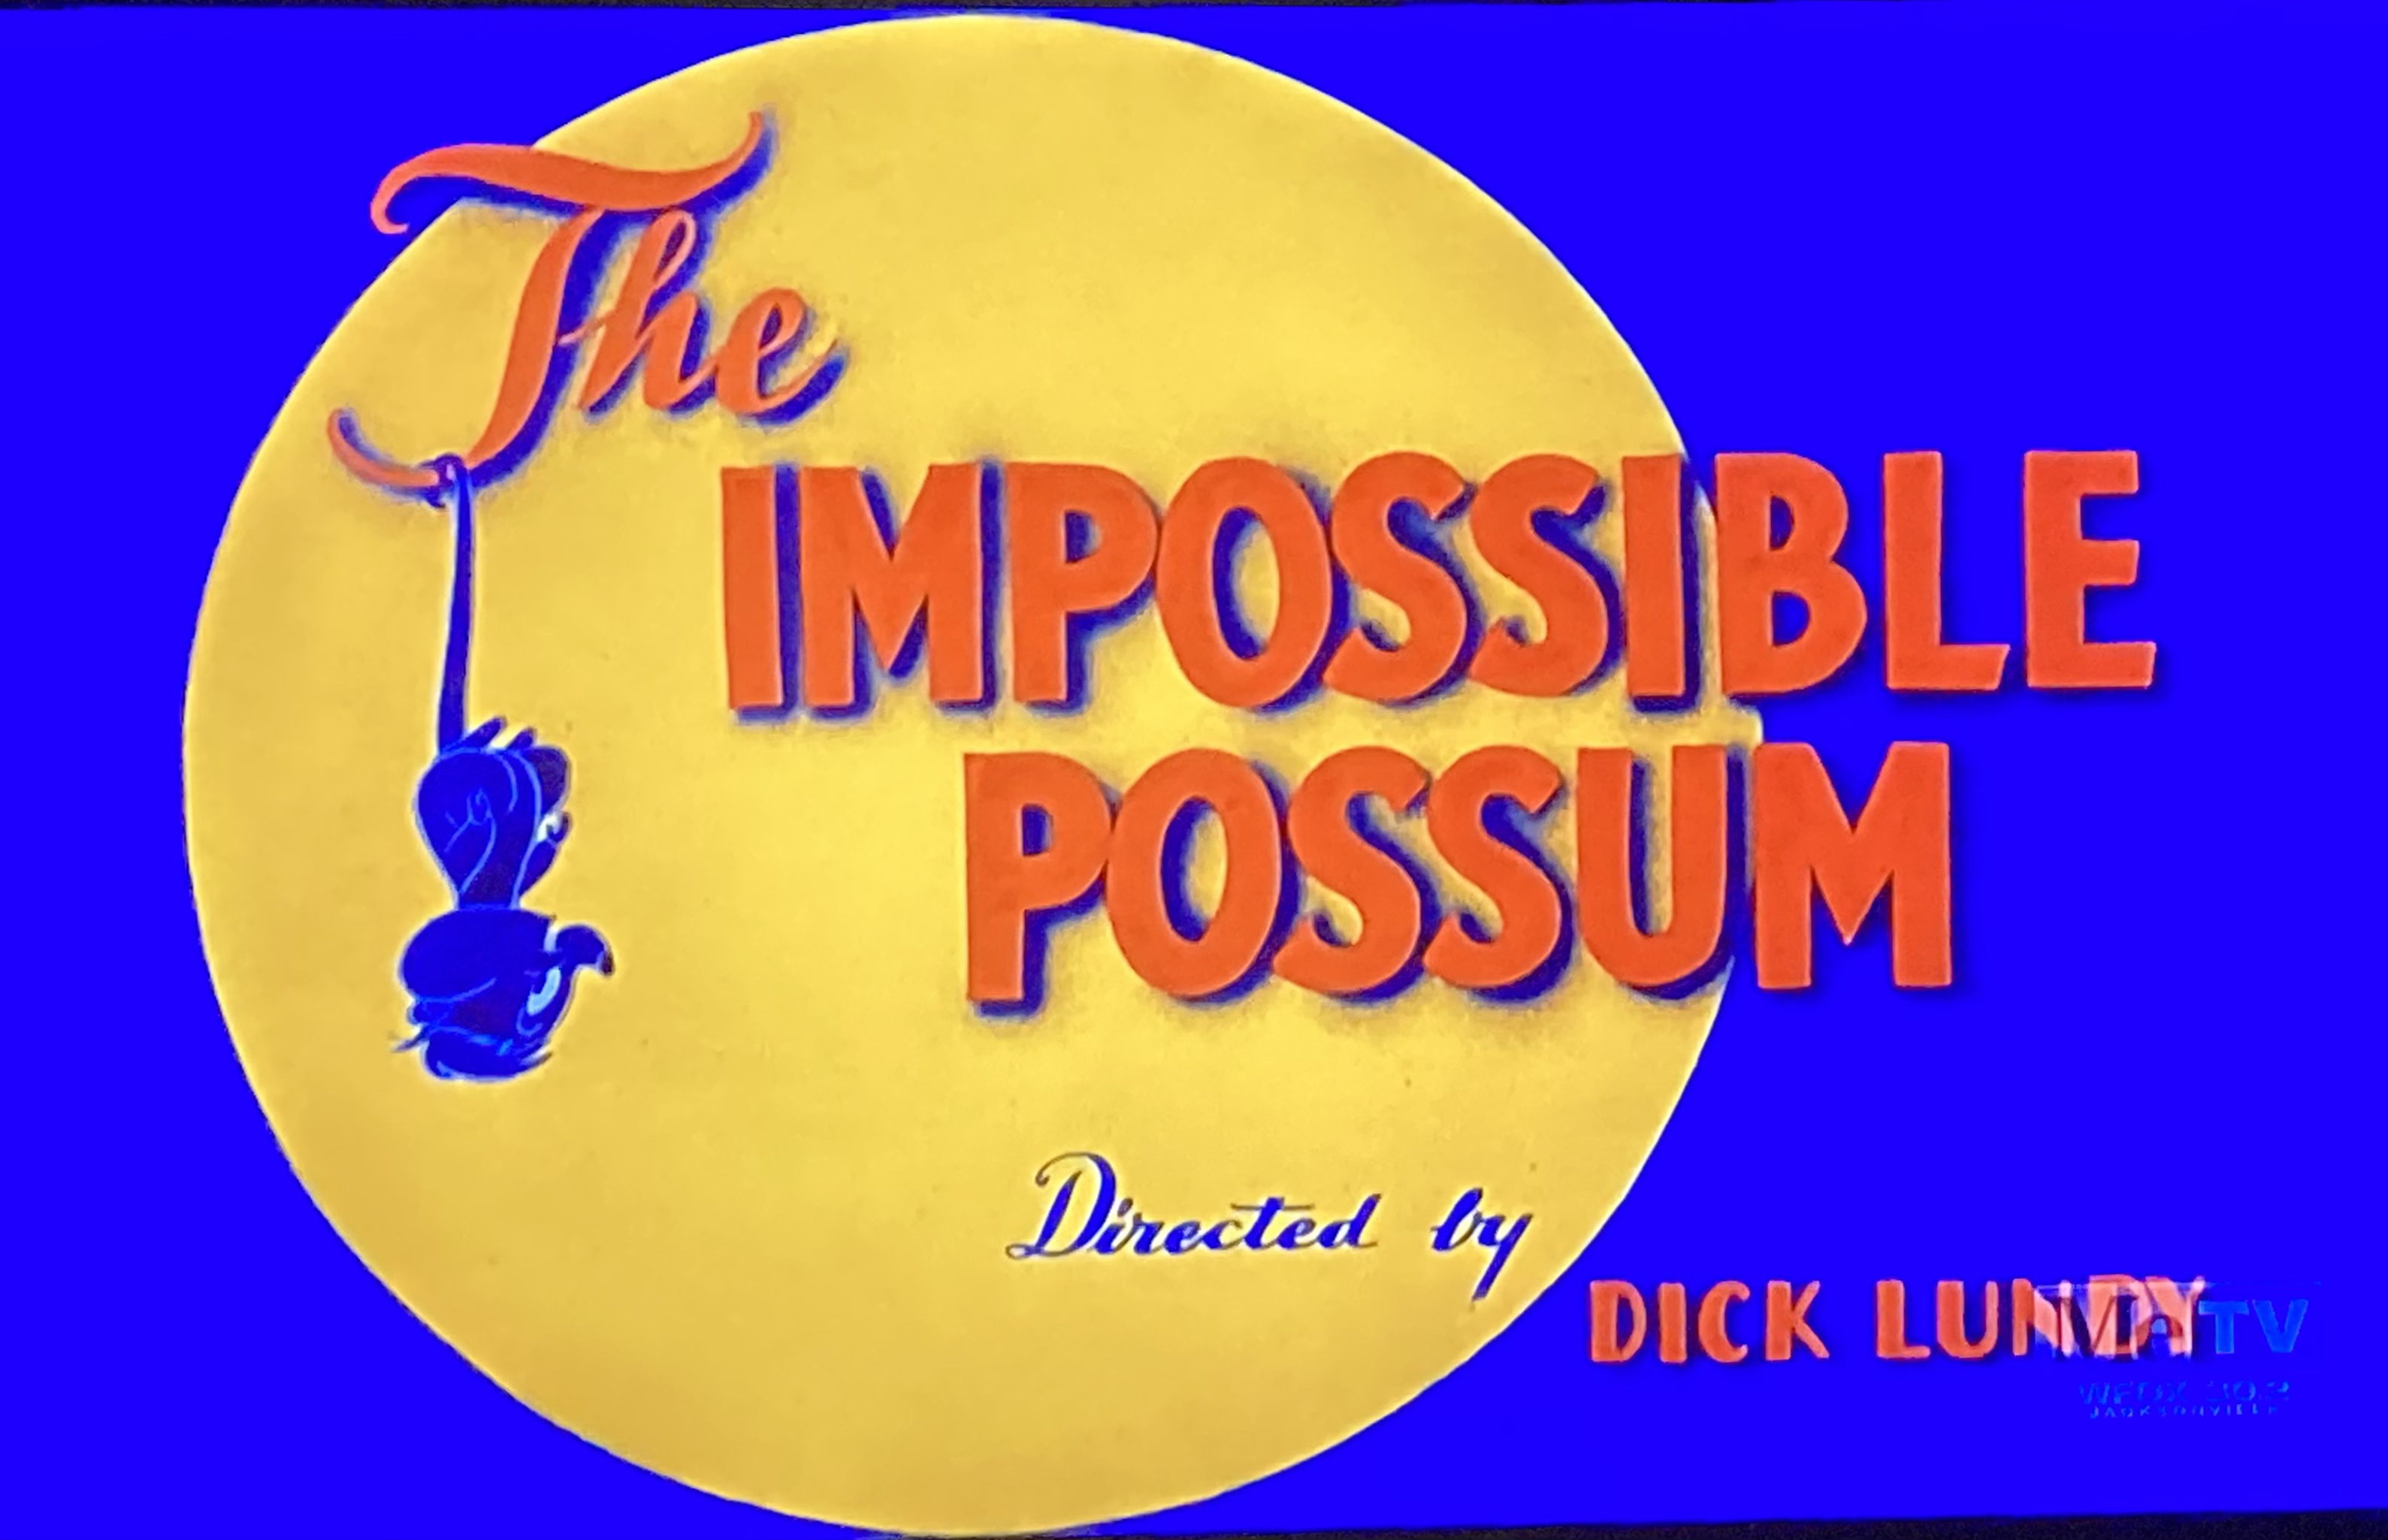 The Impossible Possum